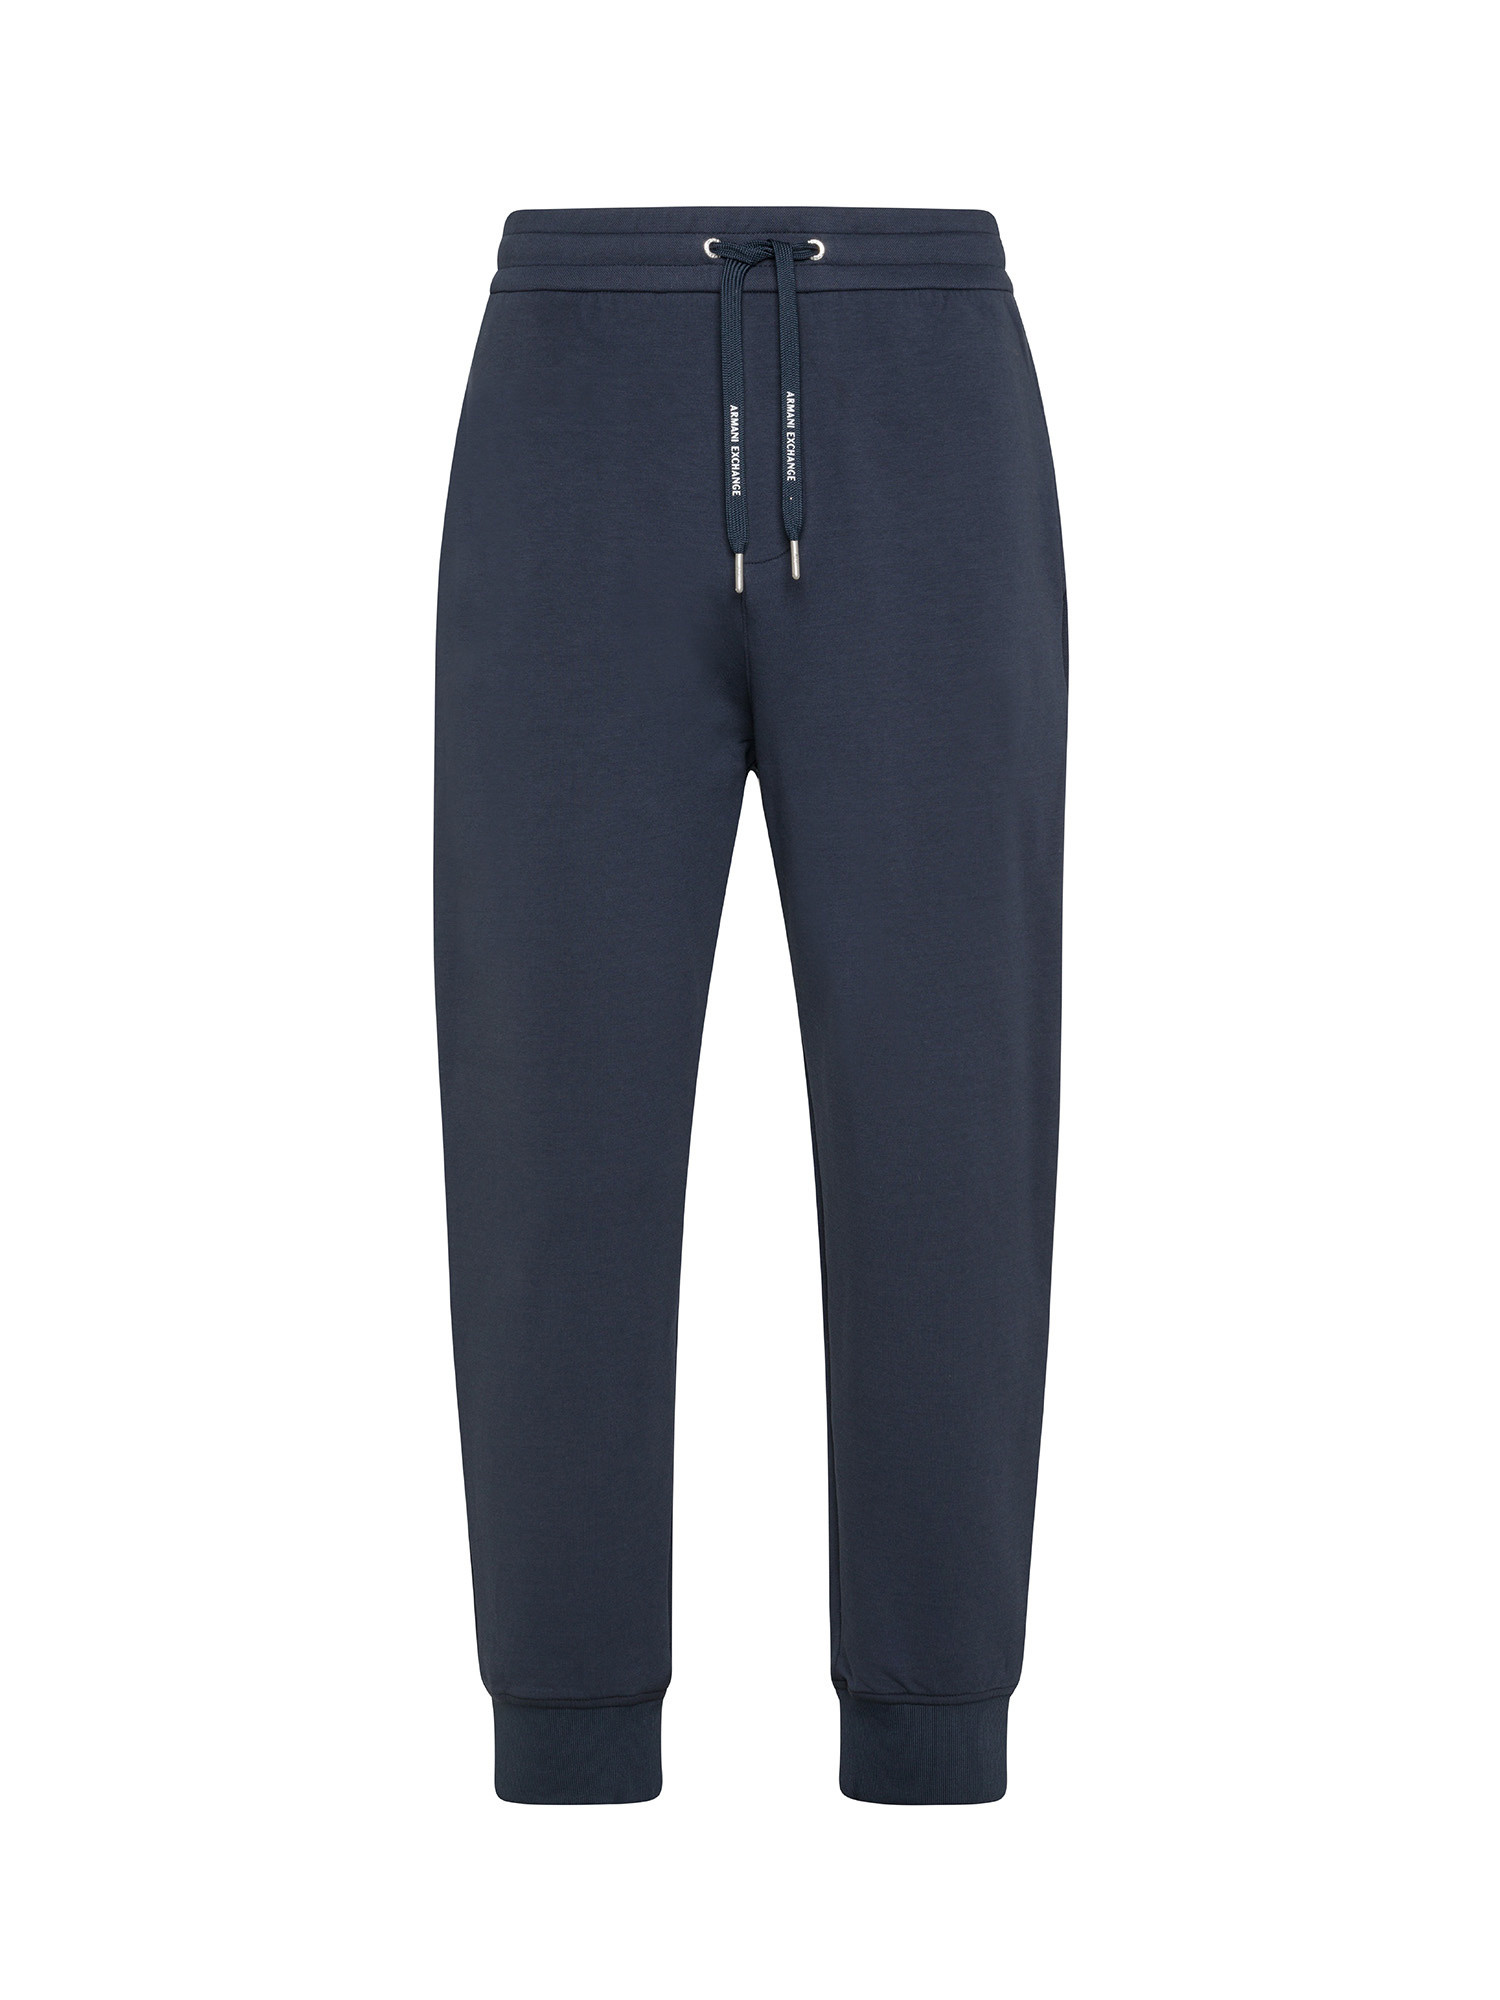 Armani Exchange - Sweatpants in fleece, Dark Blue, large image number 0